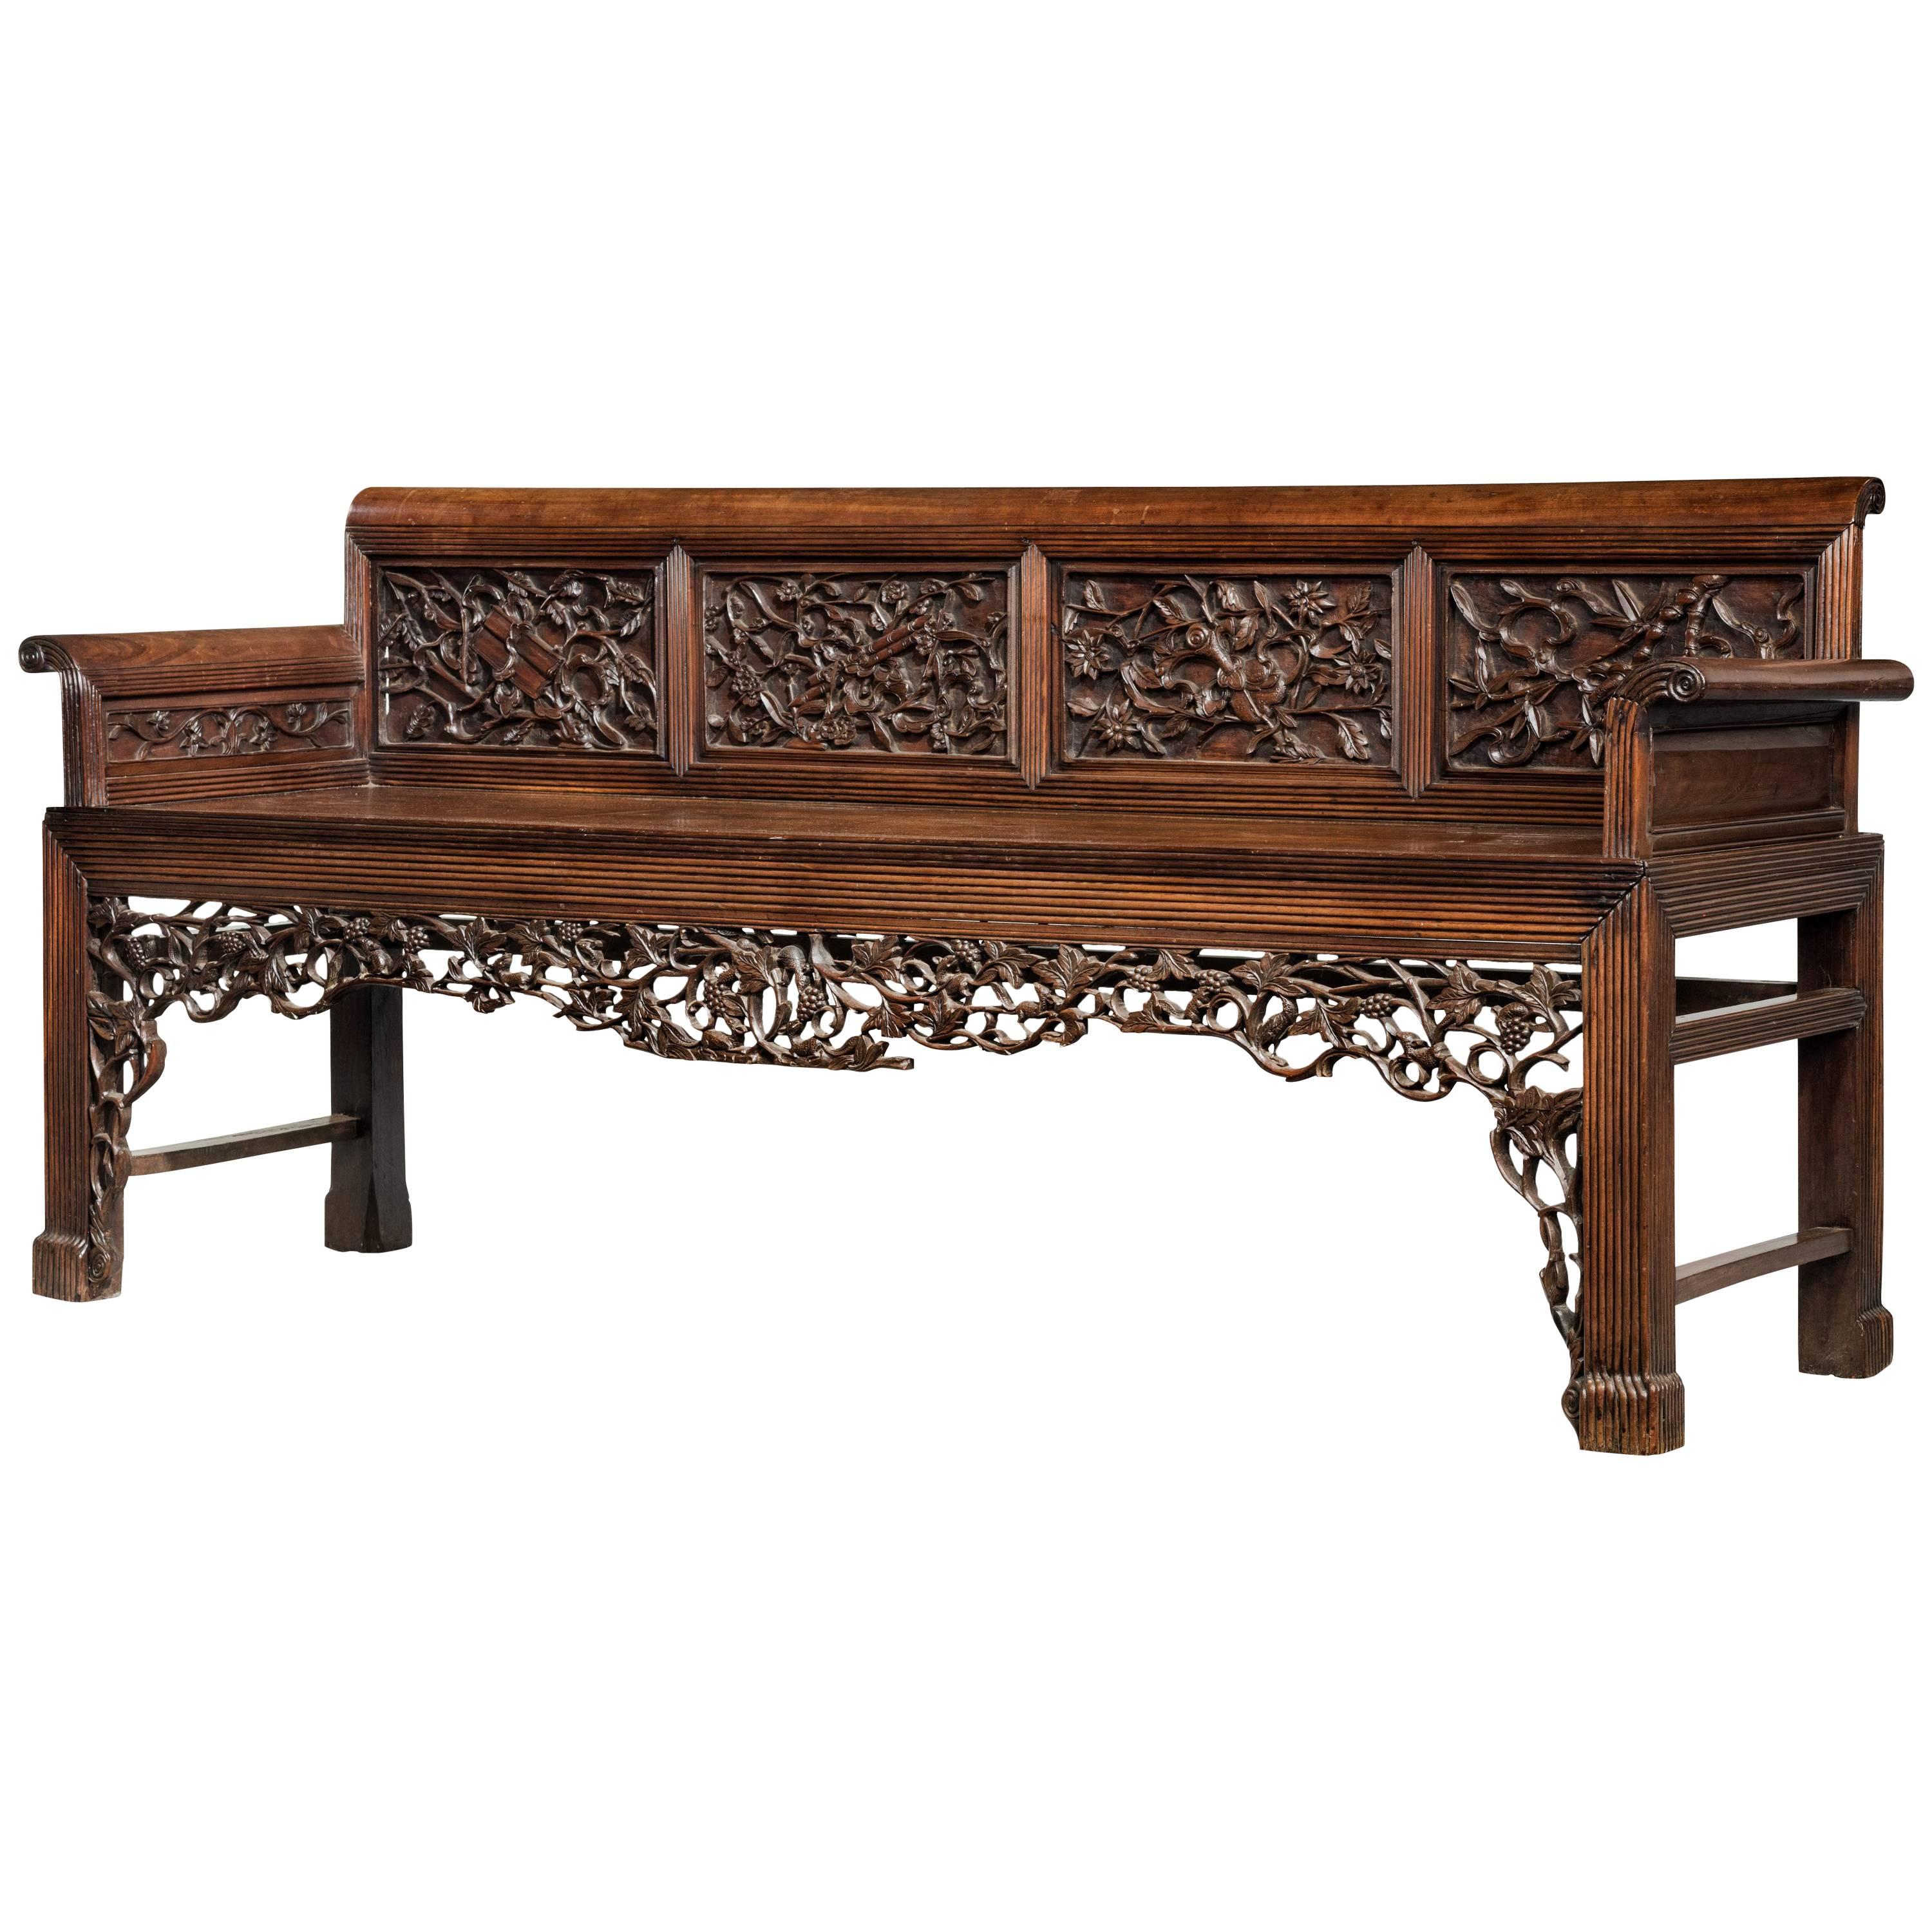 Mid-19th Century Chinese Hardwood Sofa